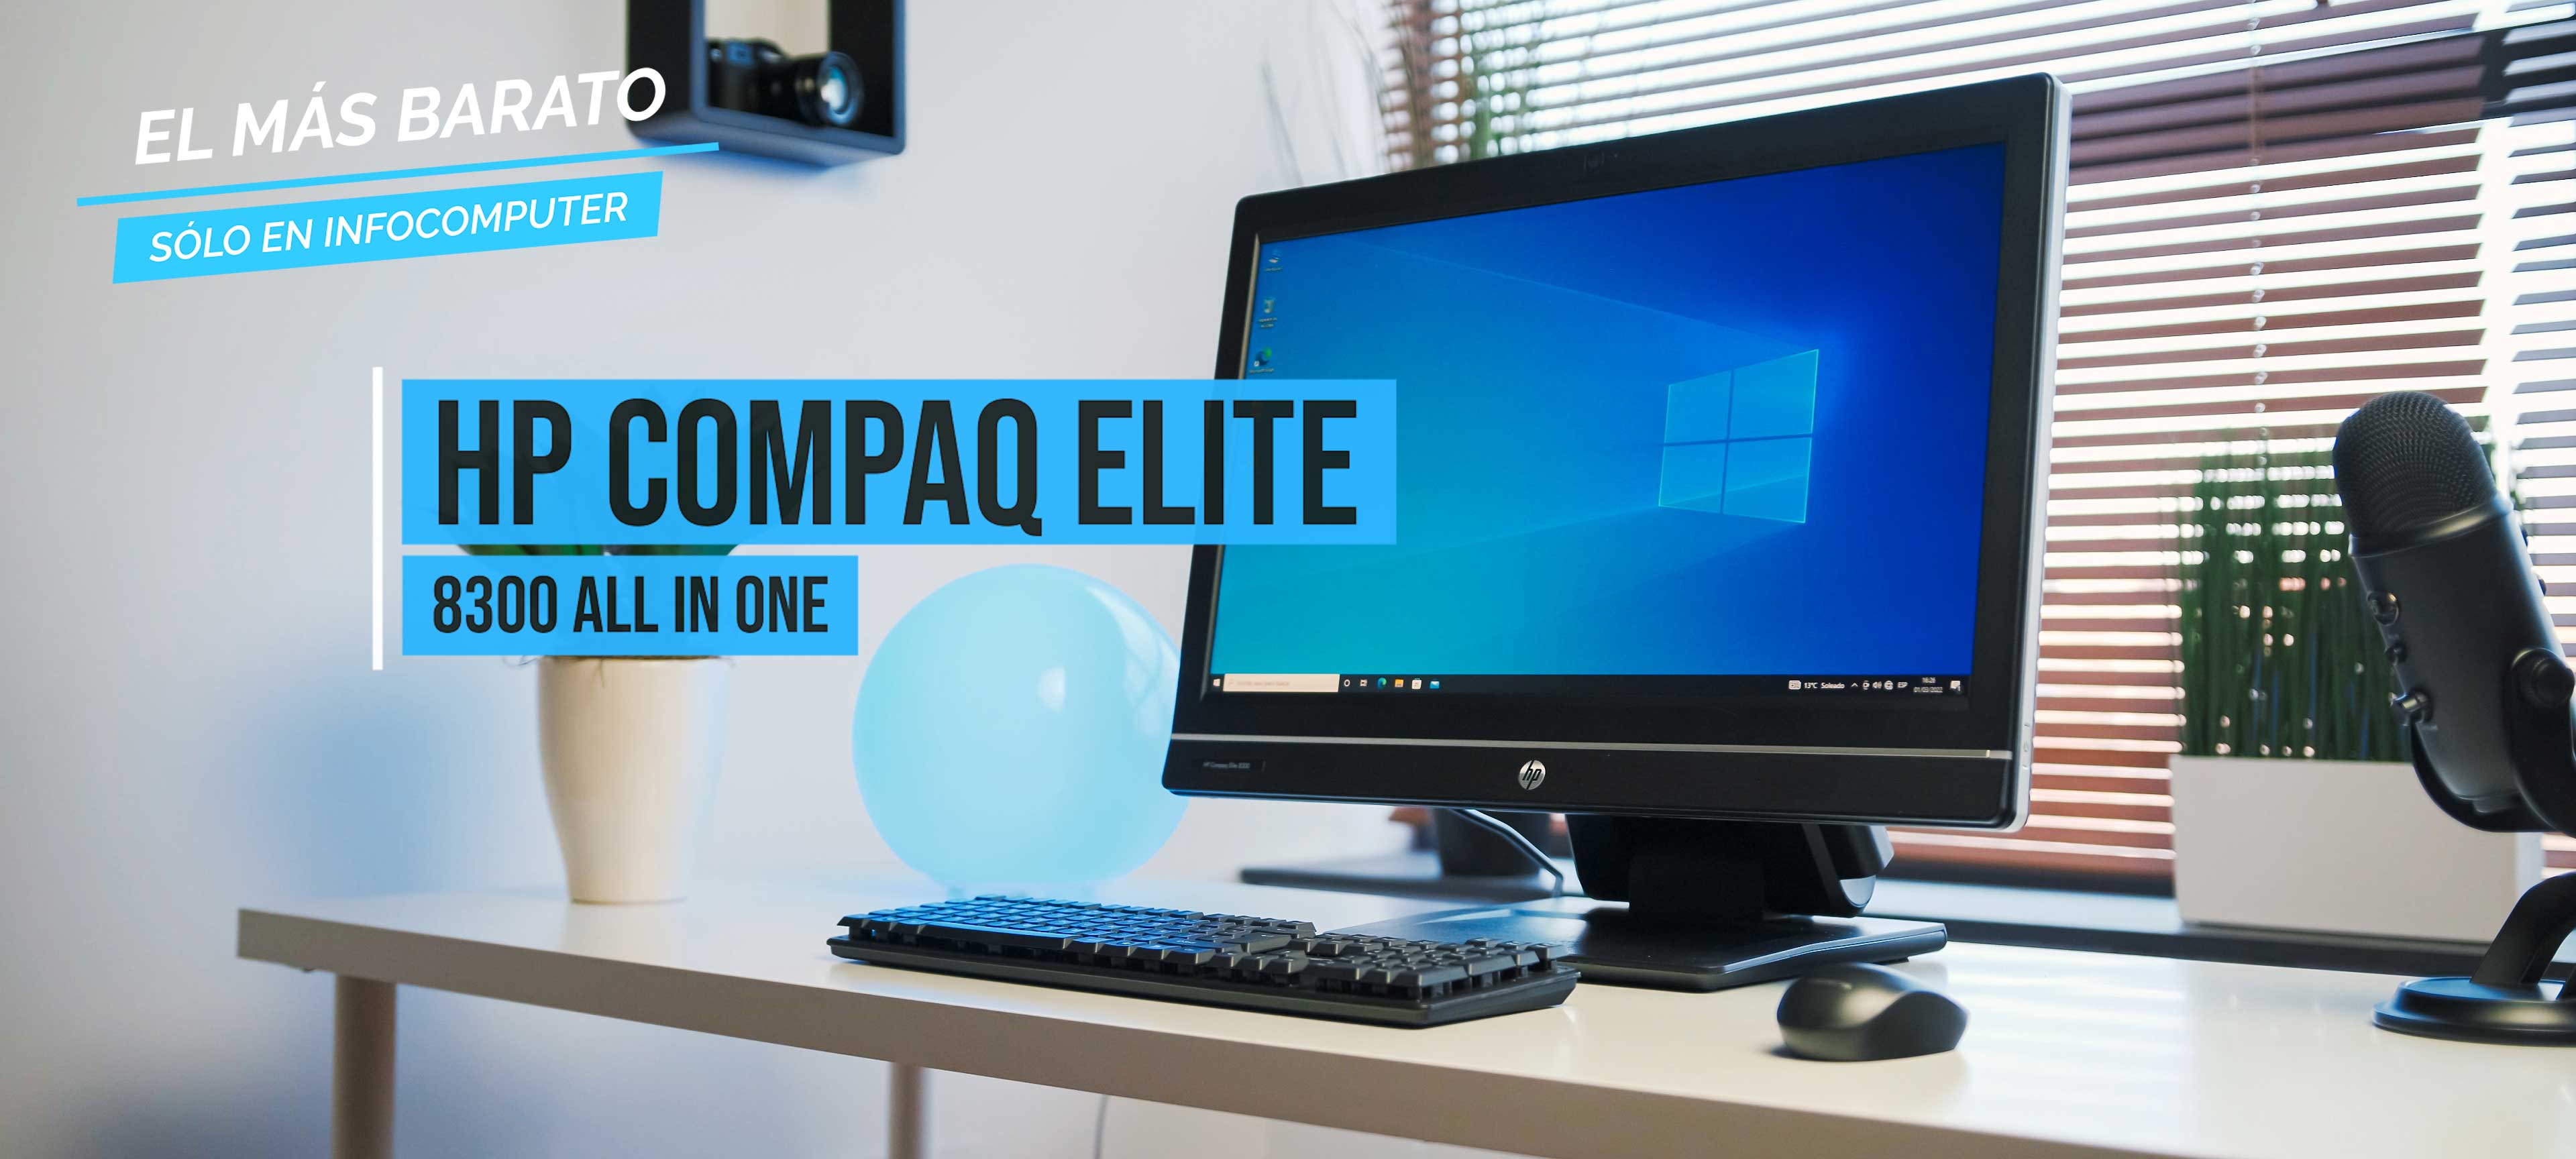 HP Compaq Elite 8300 All In One | Ordenadores de sobremesa baratos